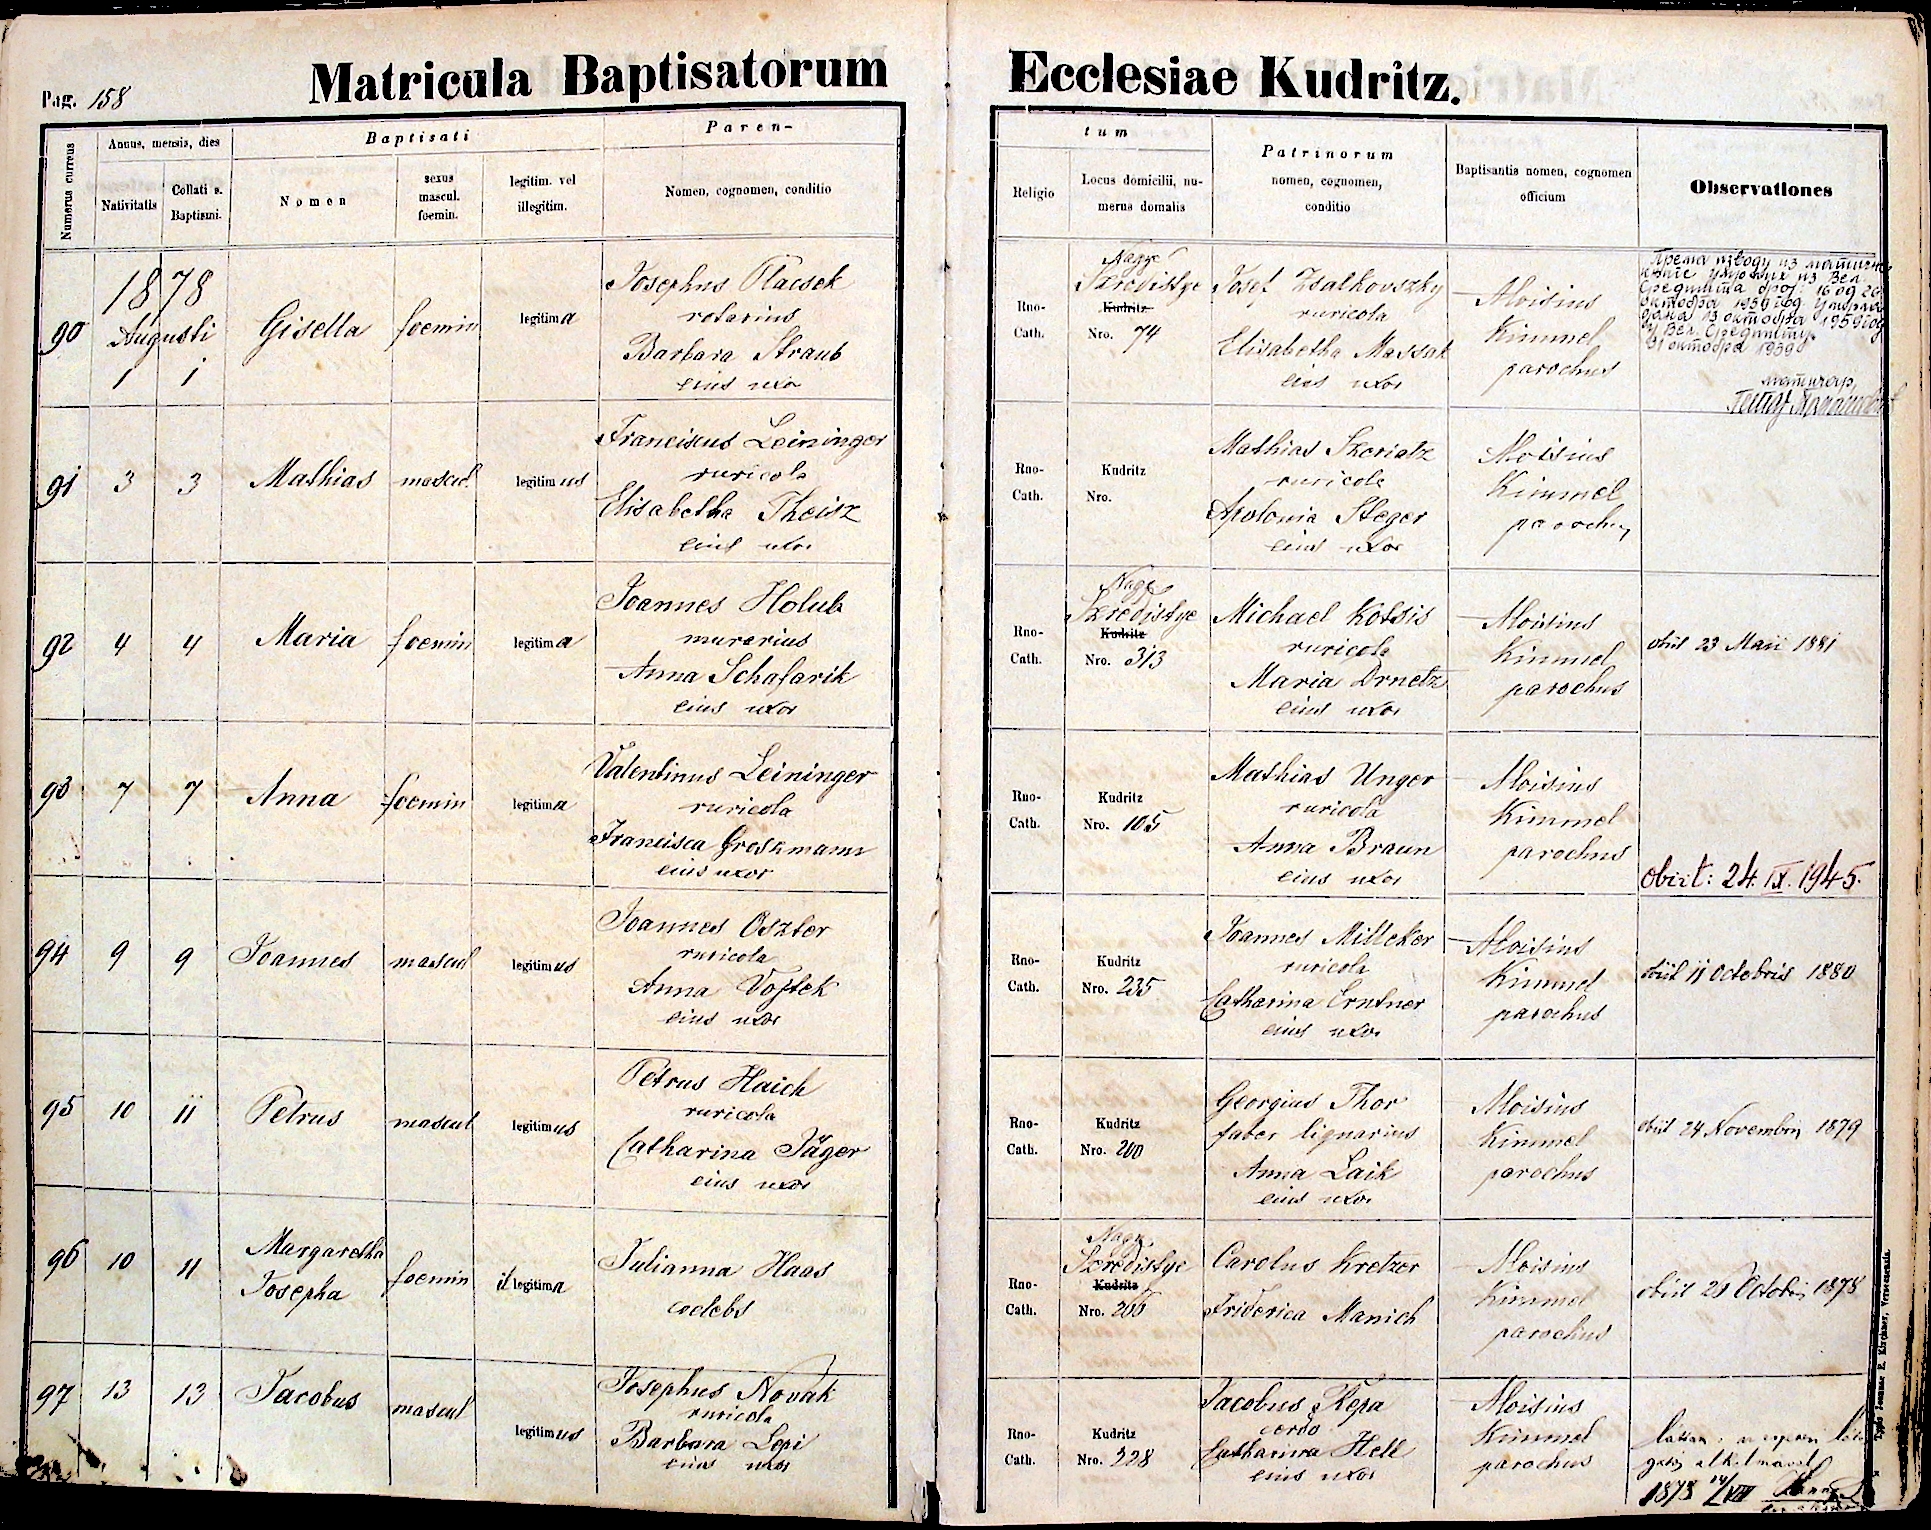 images/church_records/BIRTHS/1884-1899B/1894/158